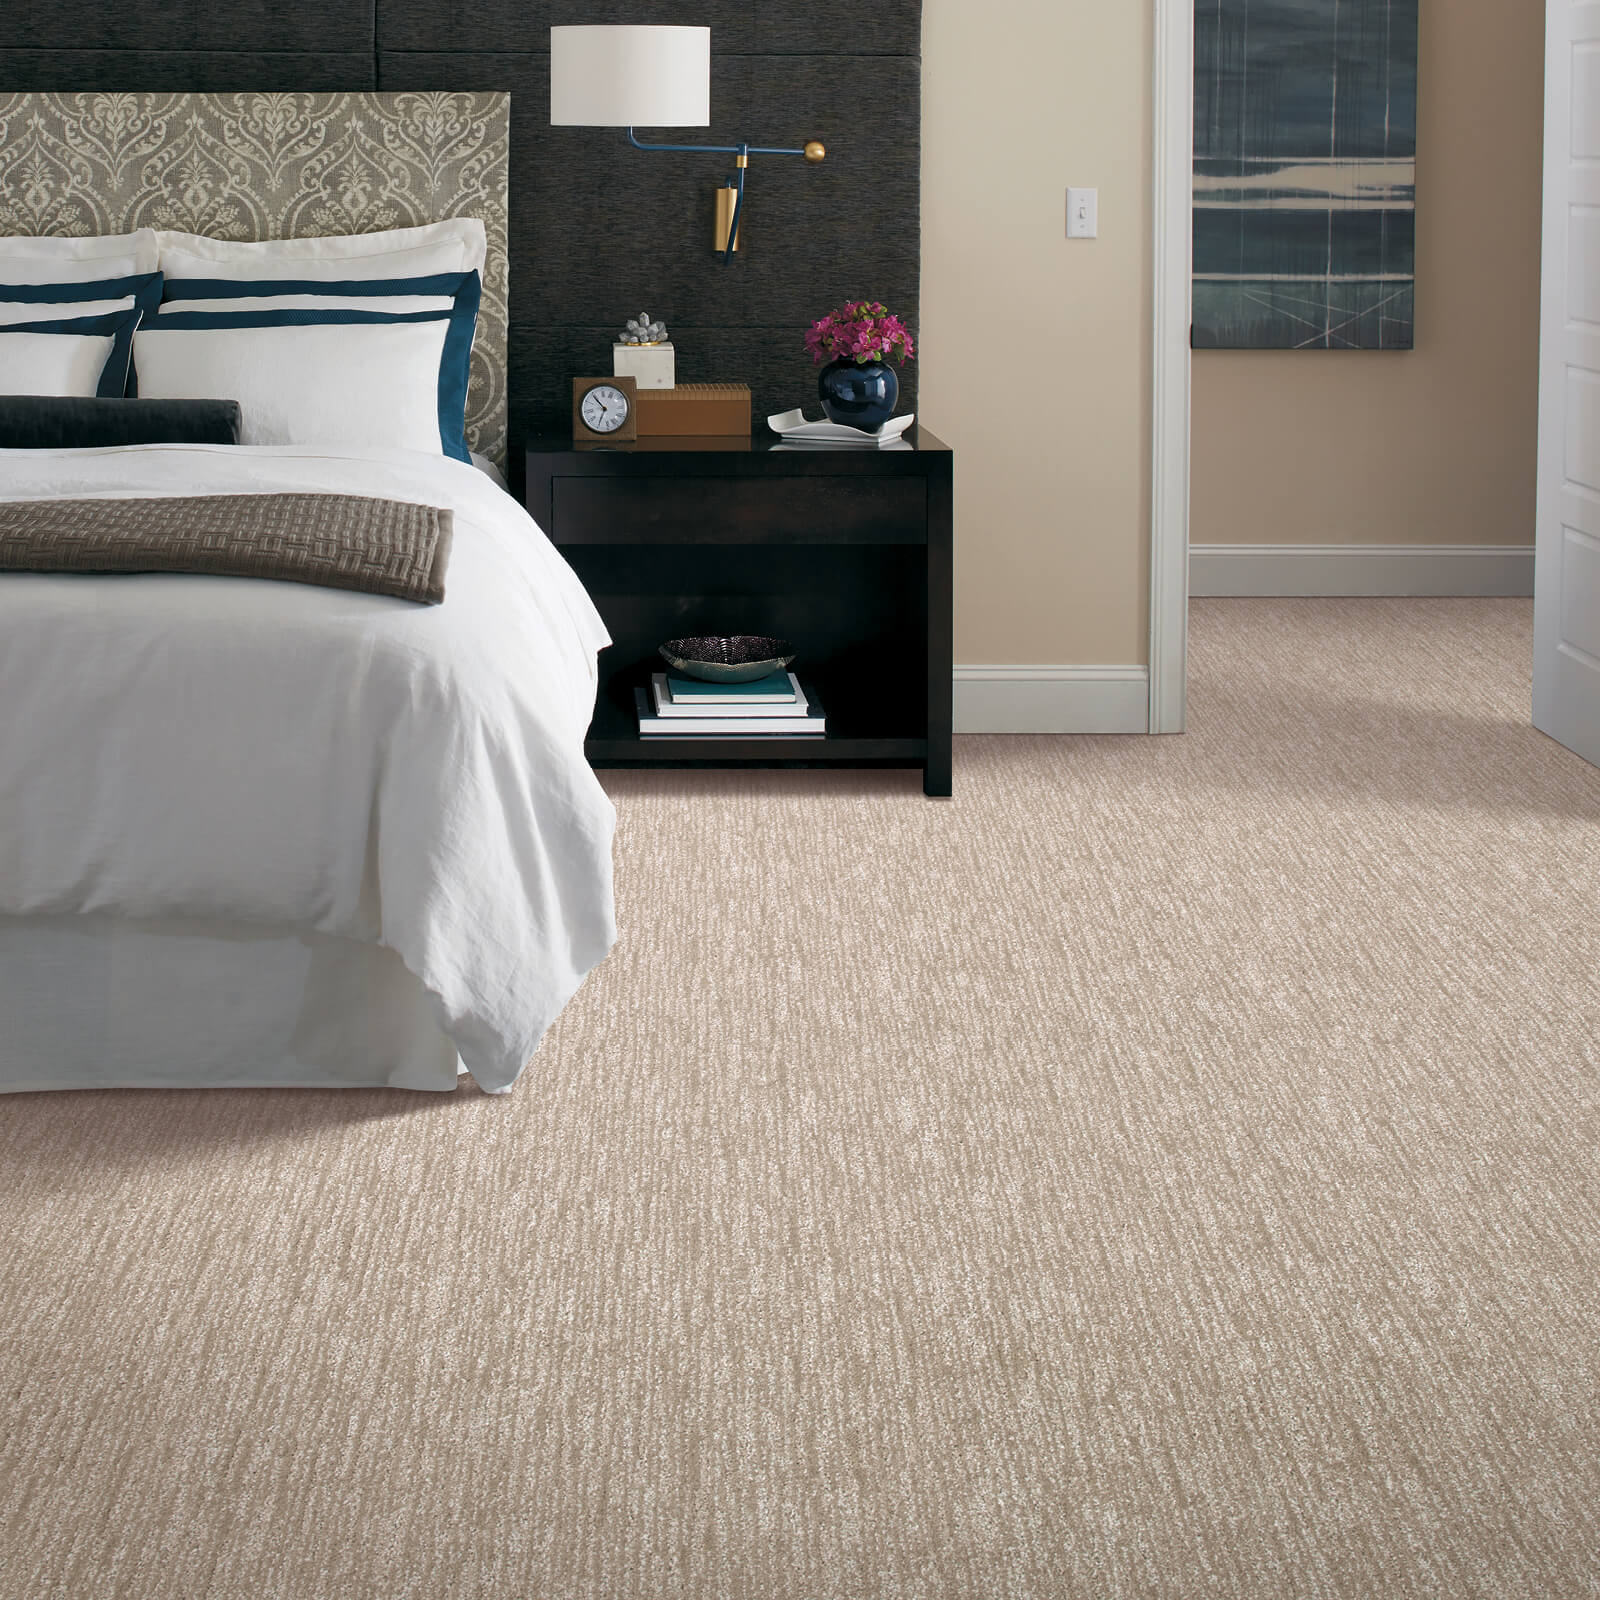 New carpet in bedroom | Gilman Floors